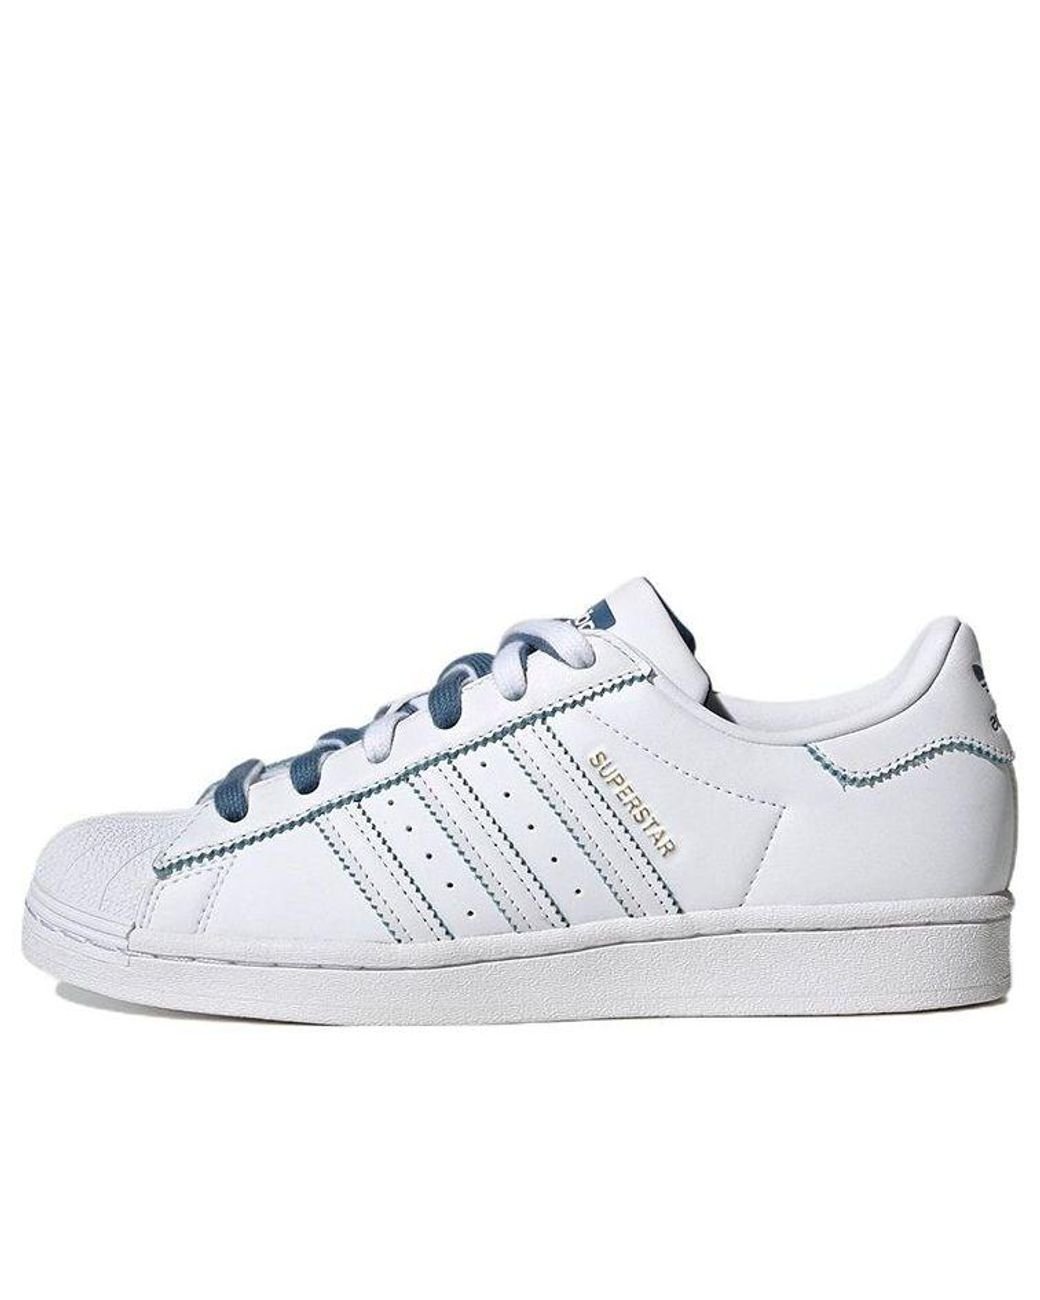 adidas Originals Superstar Casual Wear-resistant Skateboarding Shoes White  Blue | Lyst